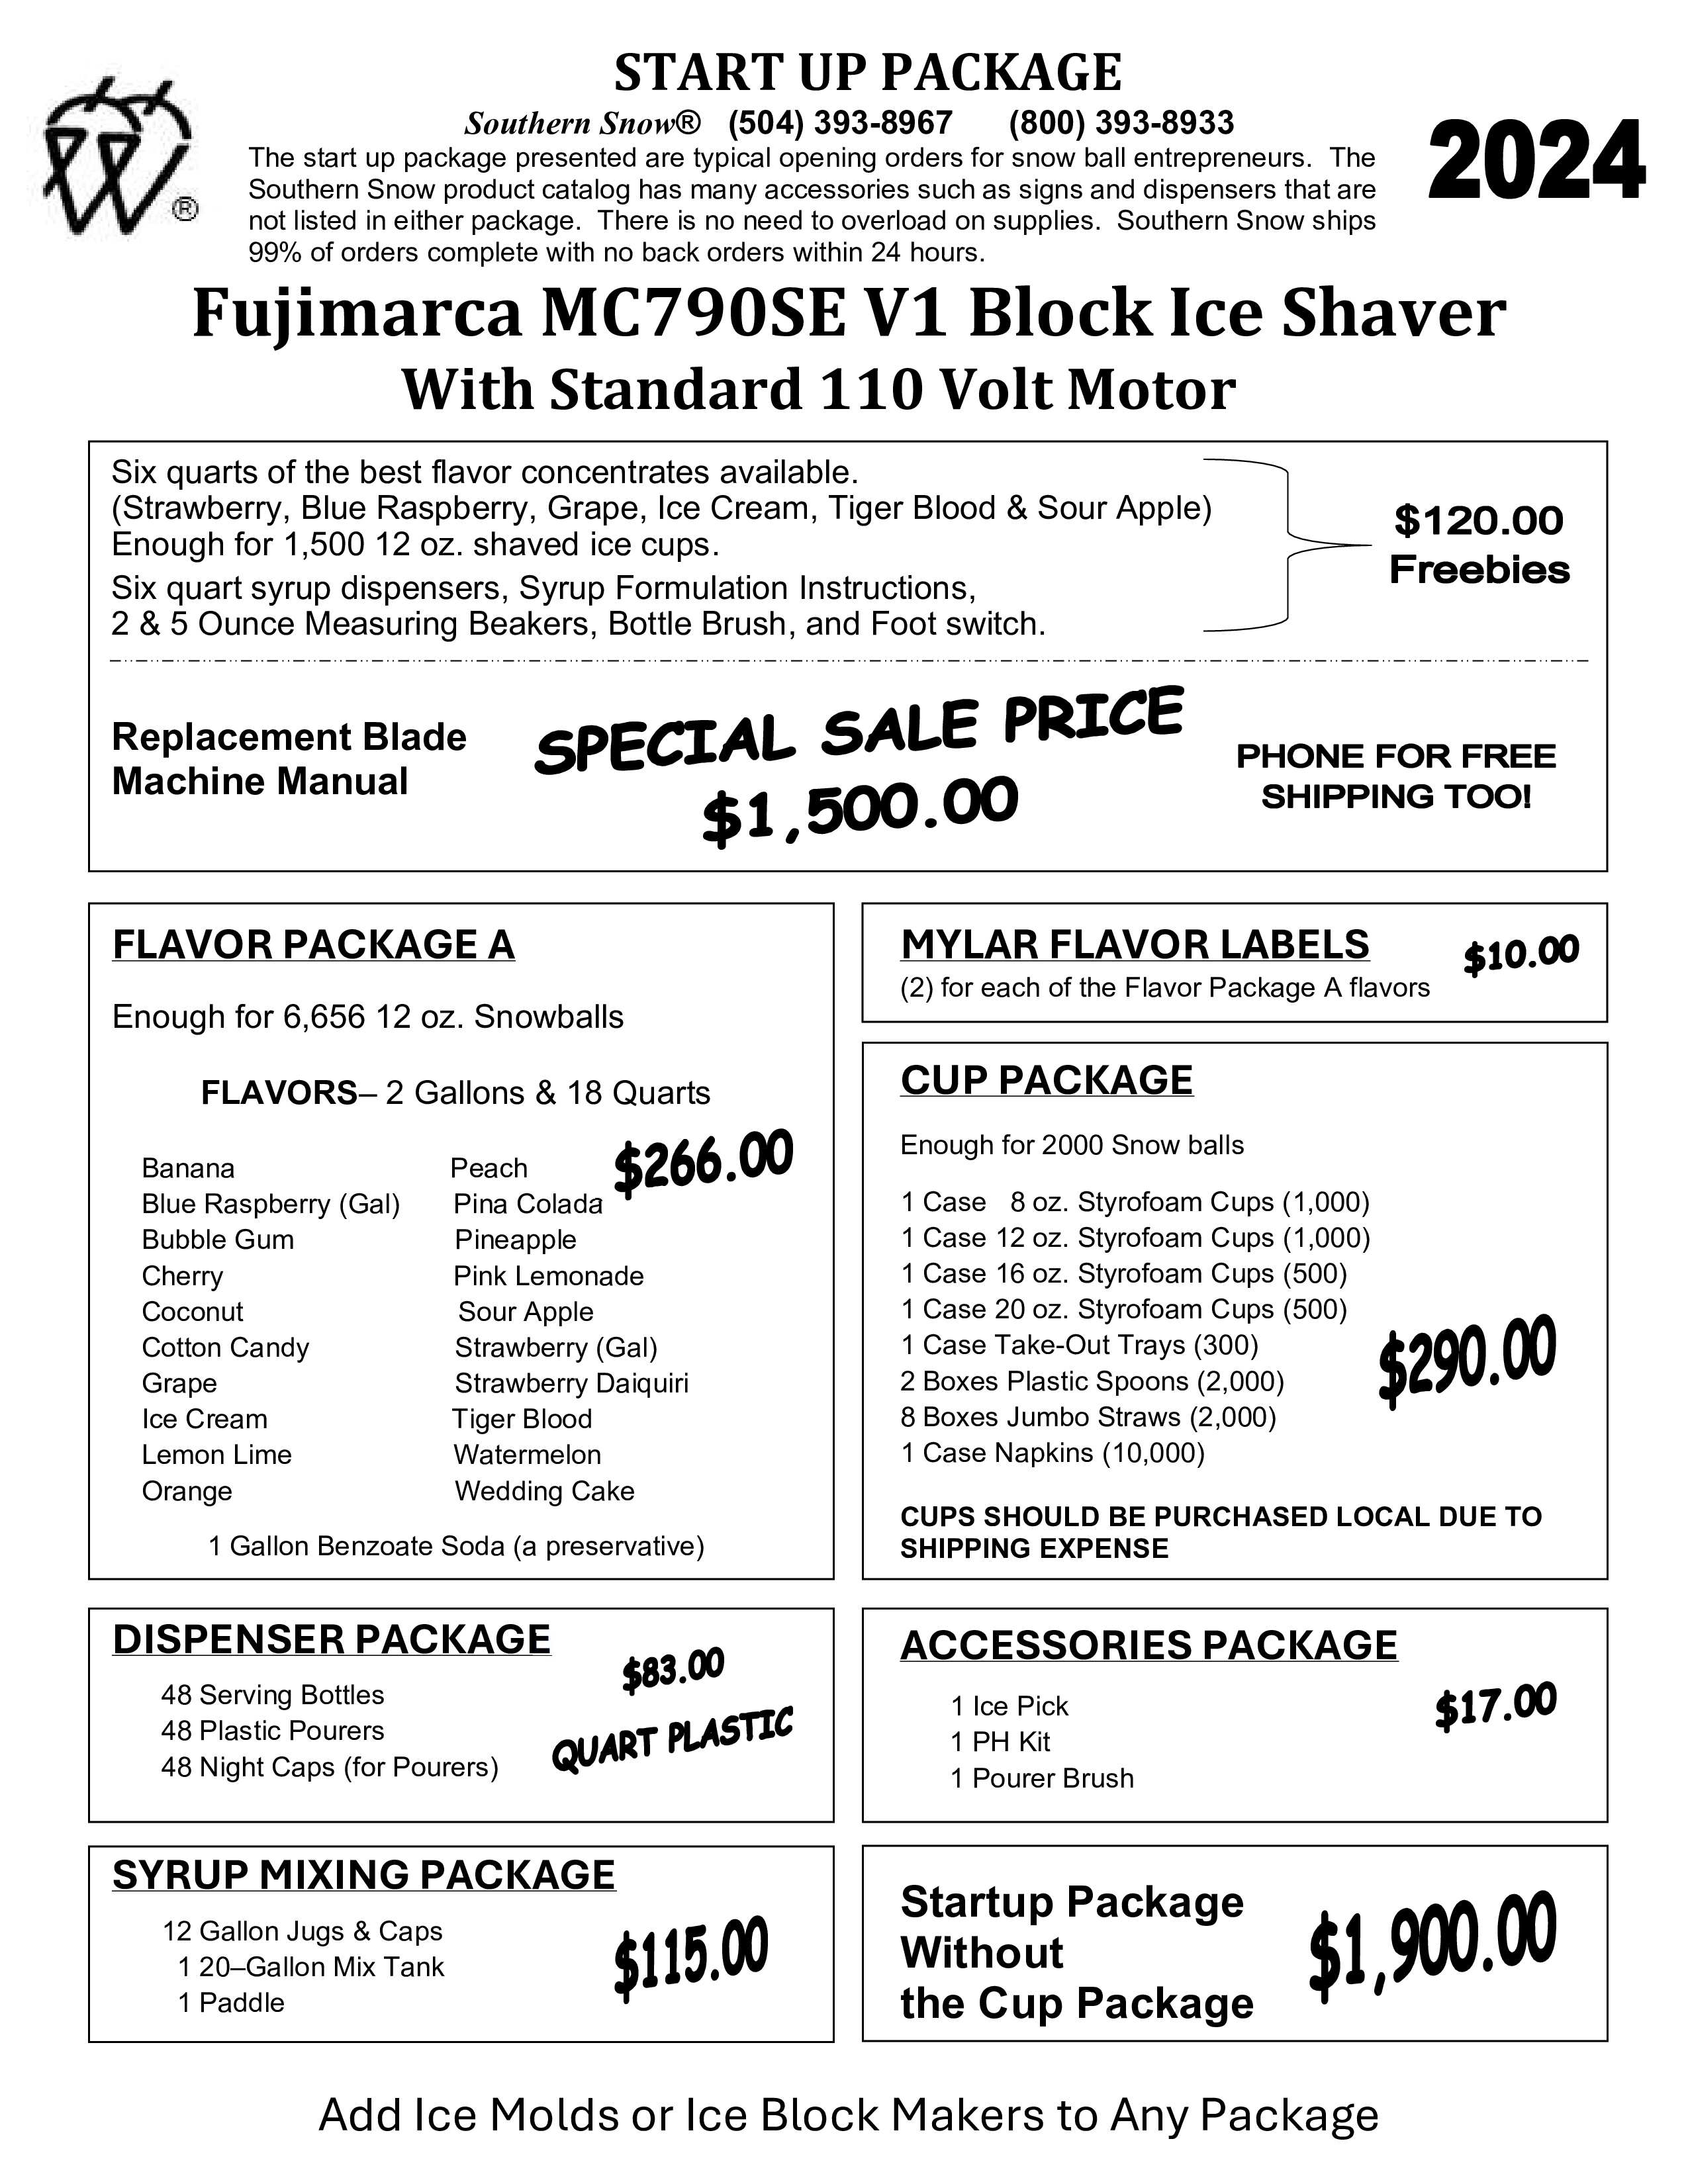 Fujimarca MC-709SE V1 Block Ice Shaver Start Up